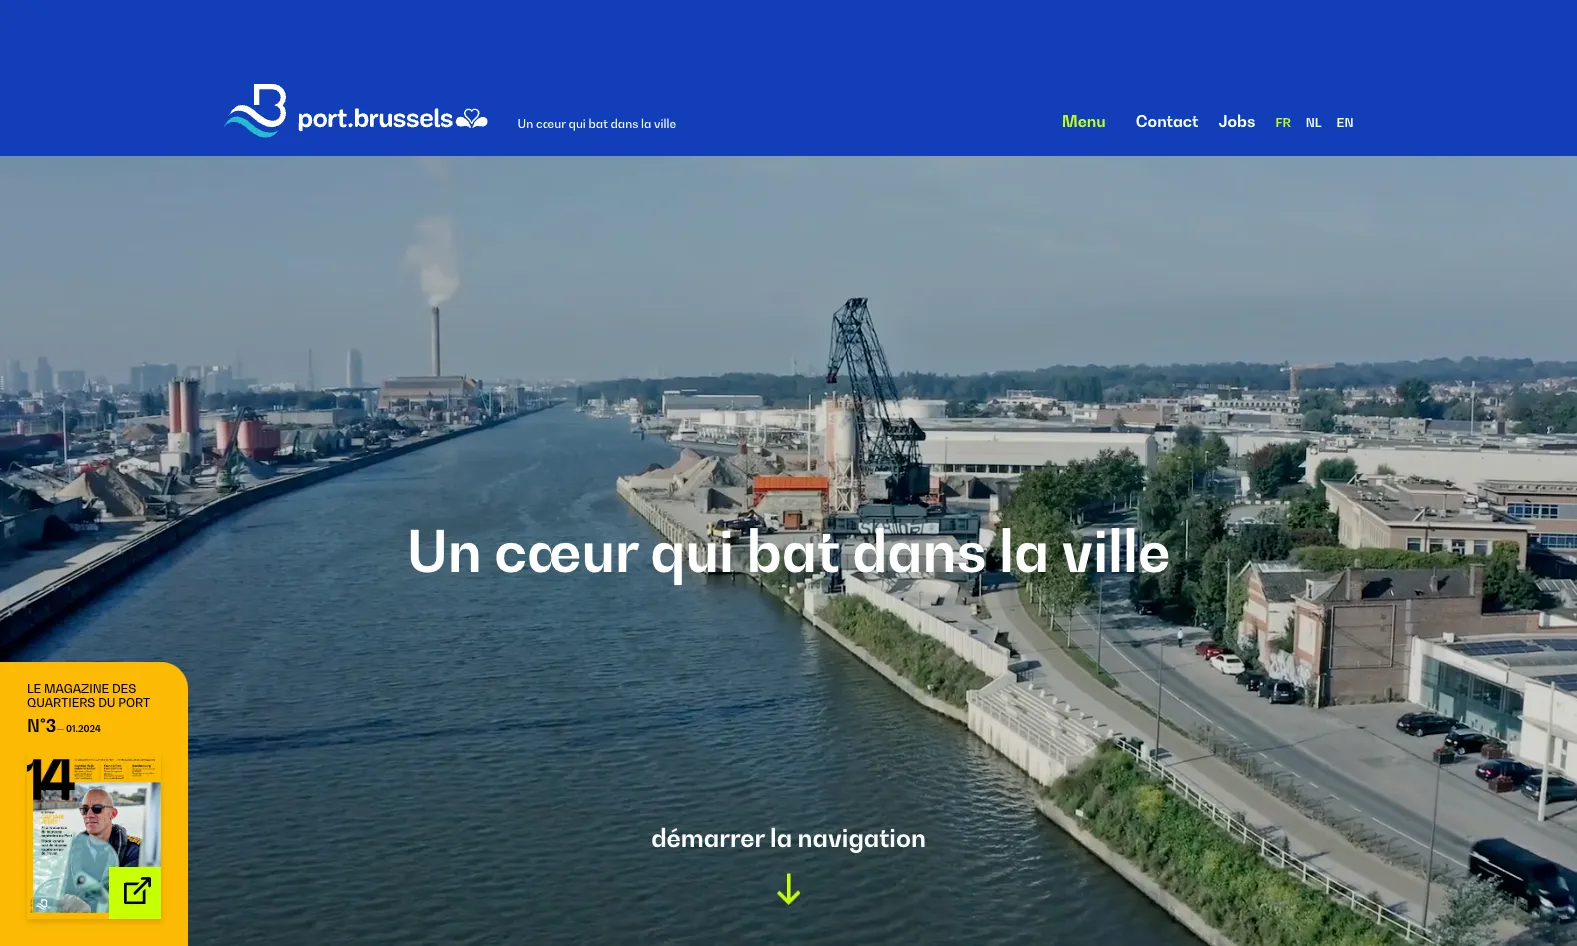 Brussels harbor website screenshot